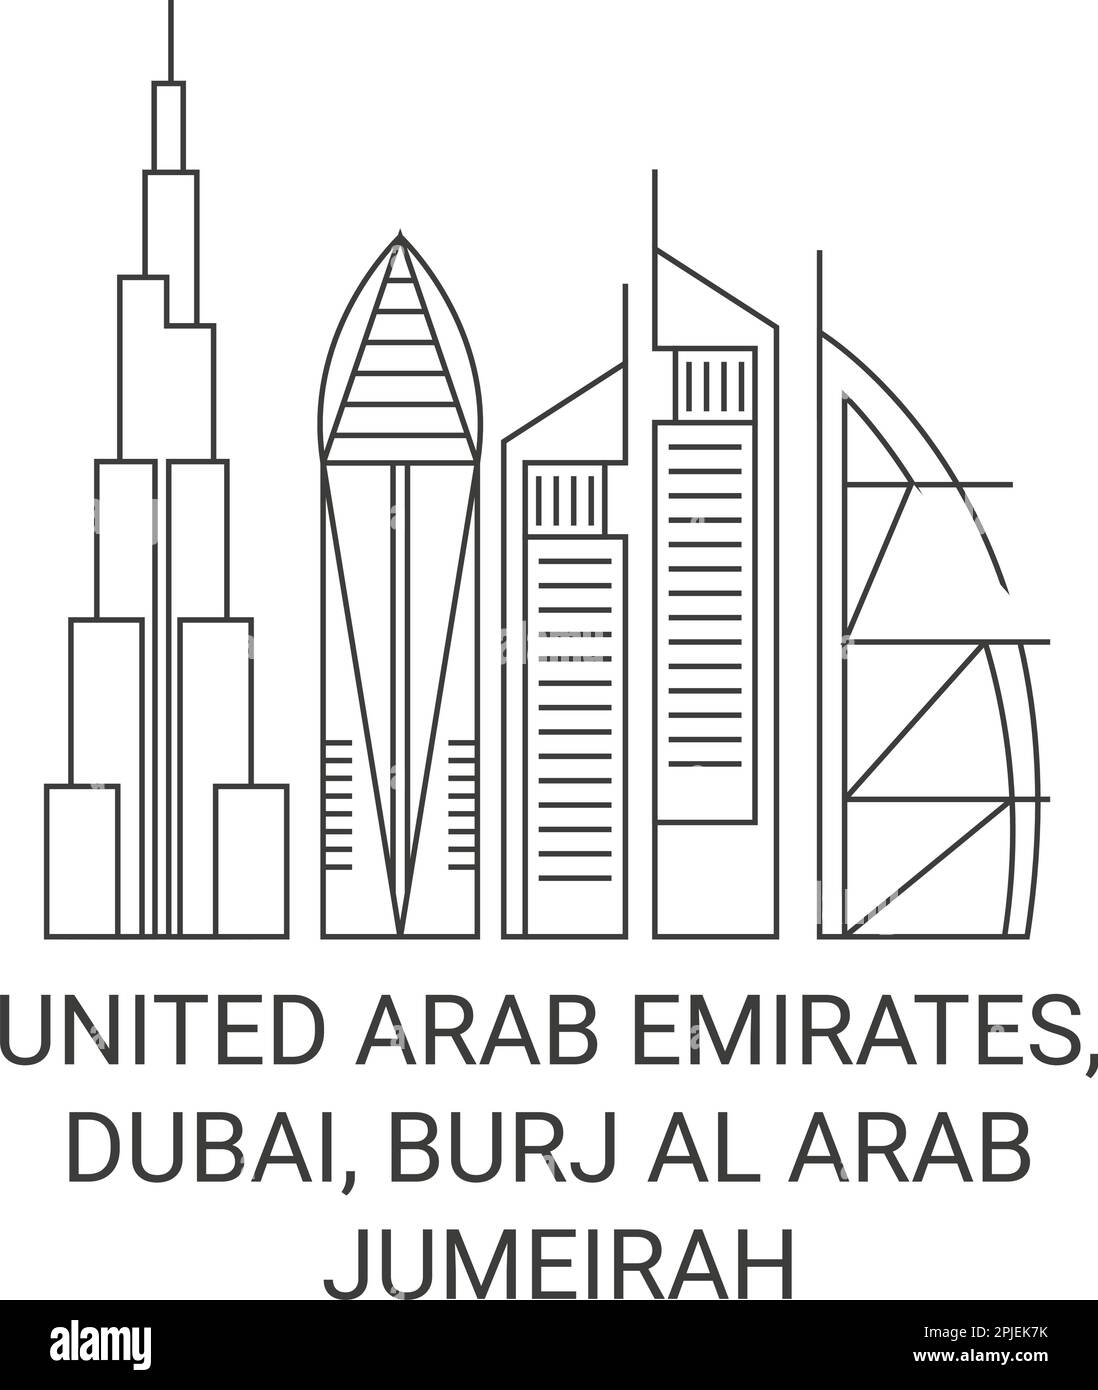 United Arab Emirates, Dubai, Burj Al Arab Jumeirah travel landmark vector illustration Stock Vector